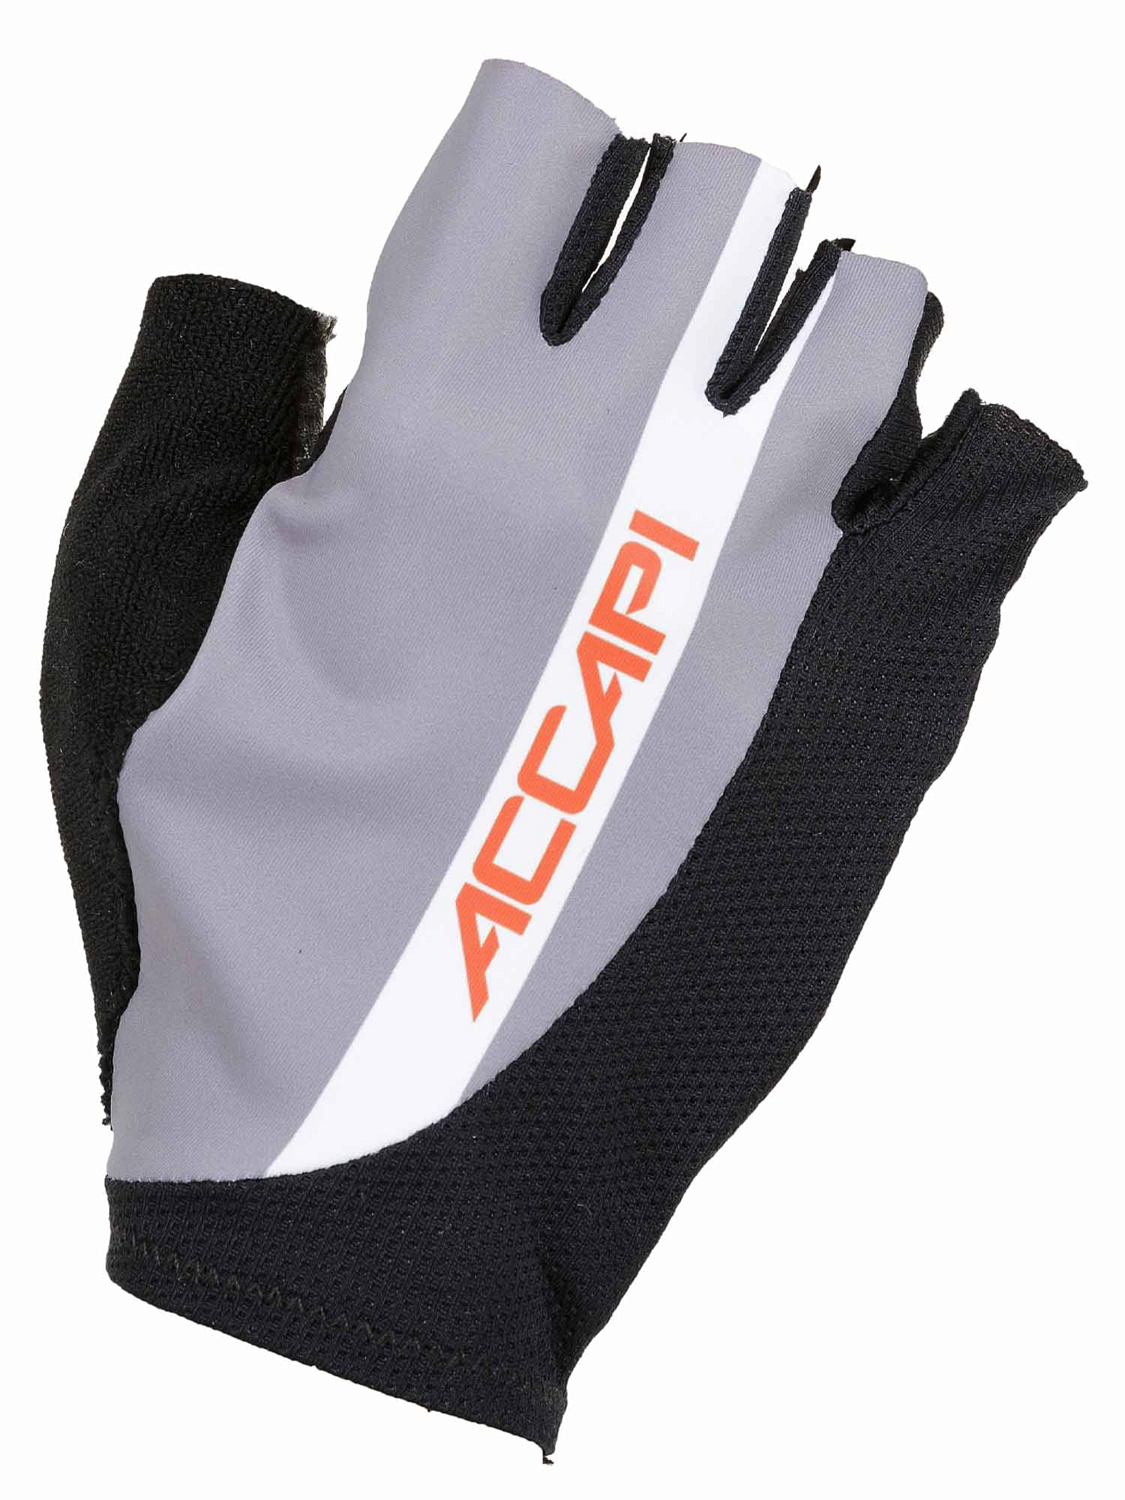 Перчатки велосипедные Accapi Fingerless Cycling Gloves Gray/White